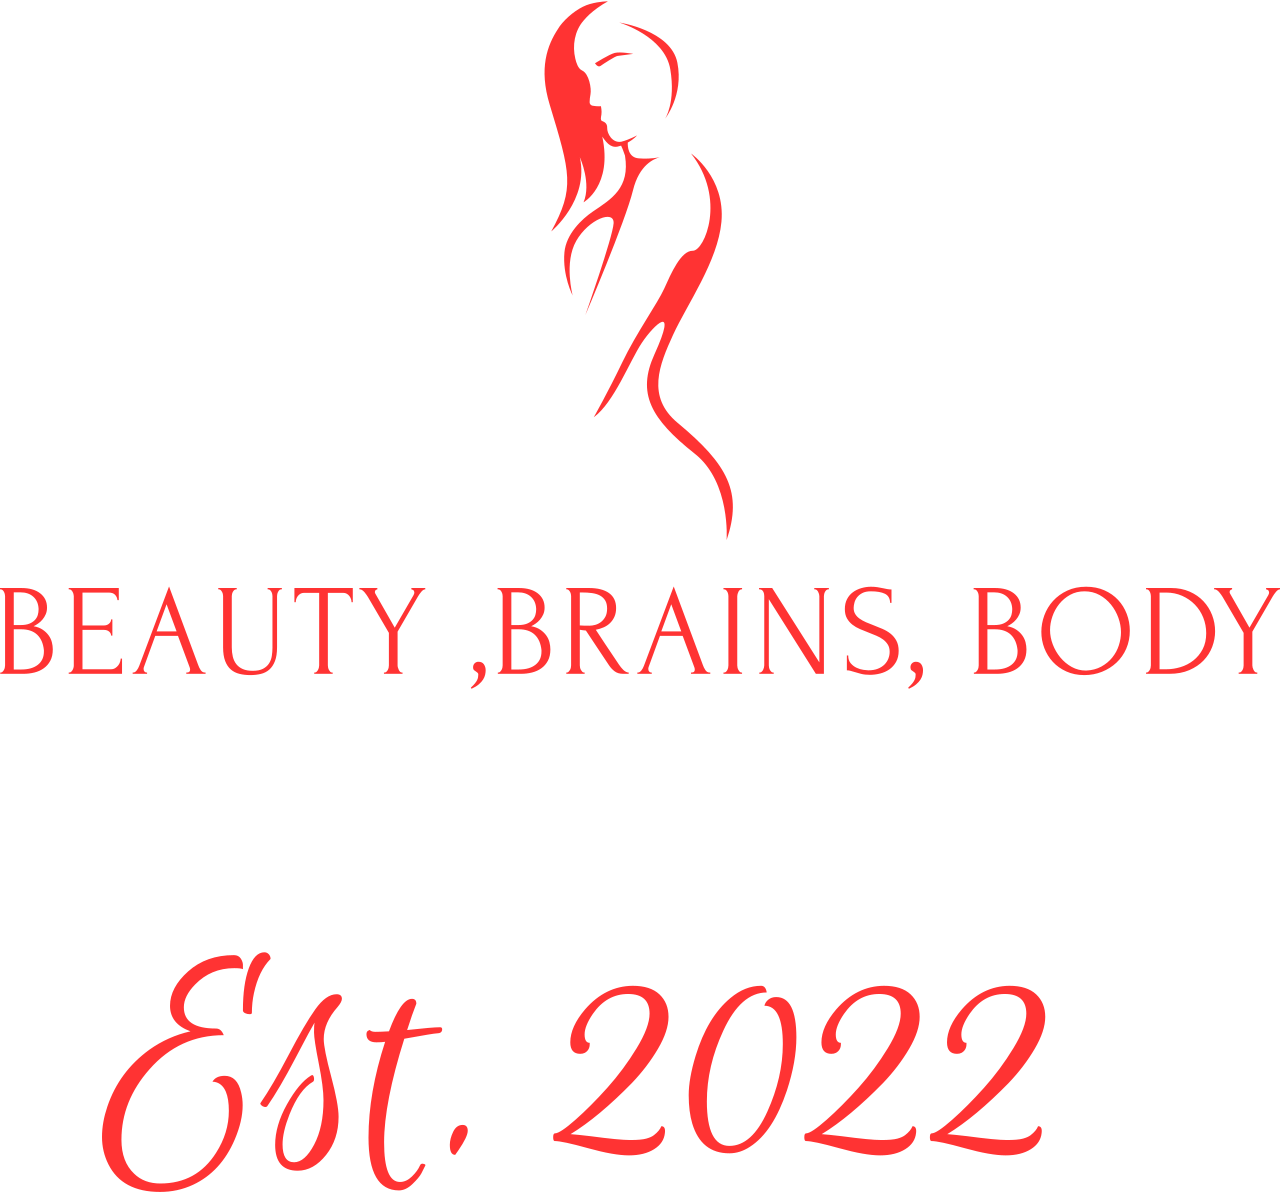 Beauty ,Brains, Body's logo